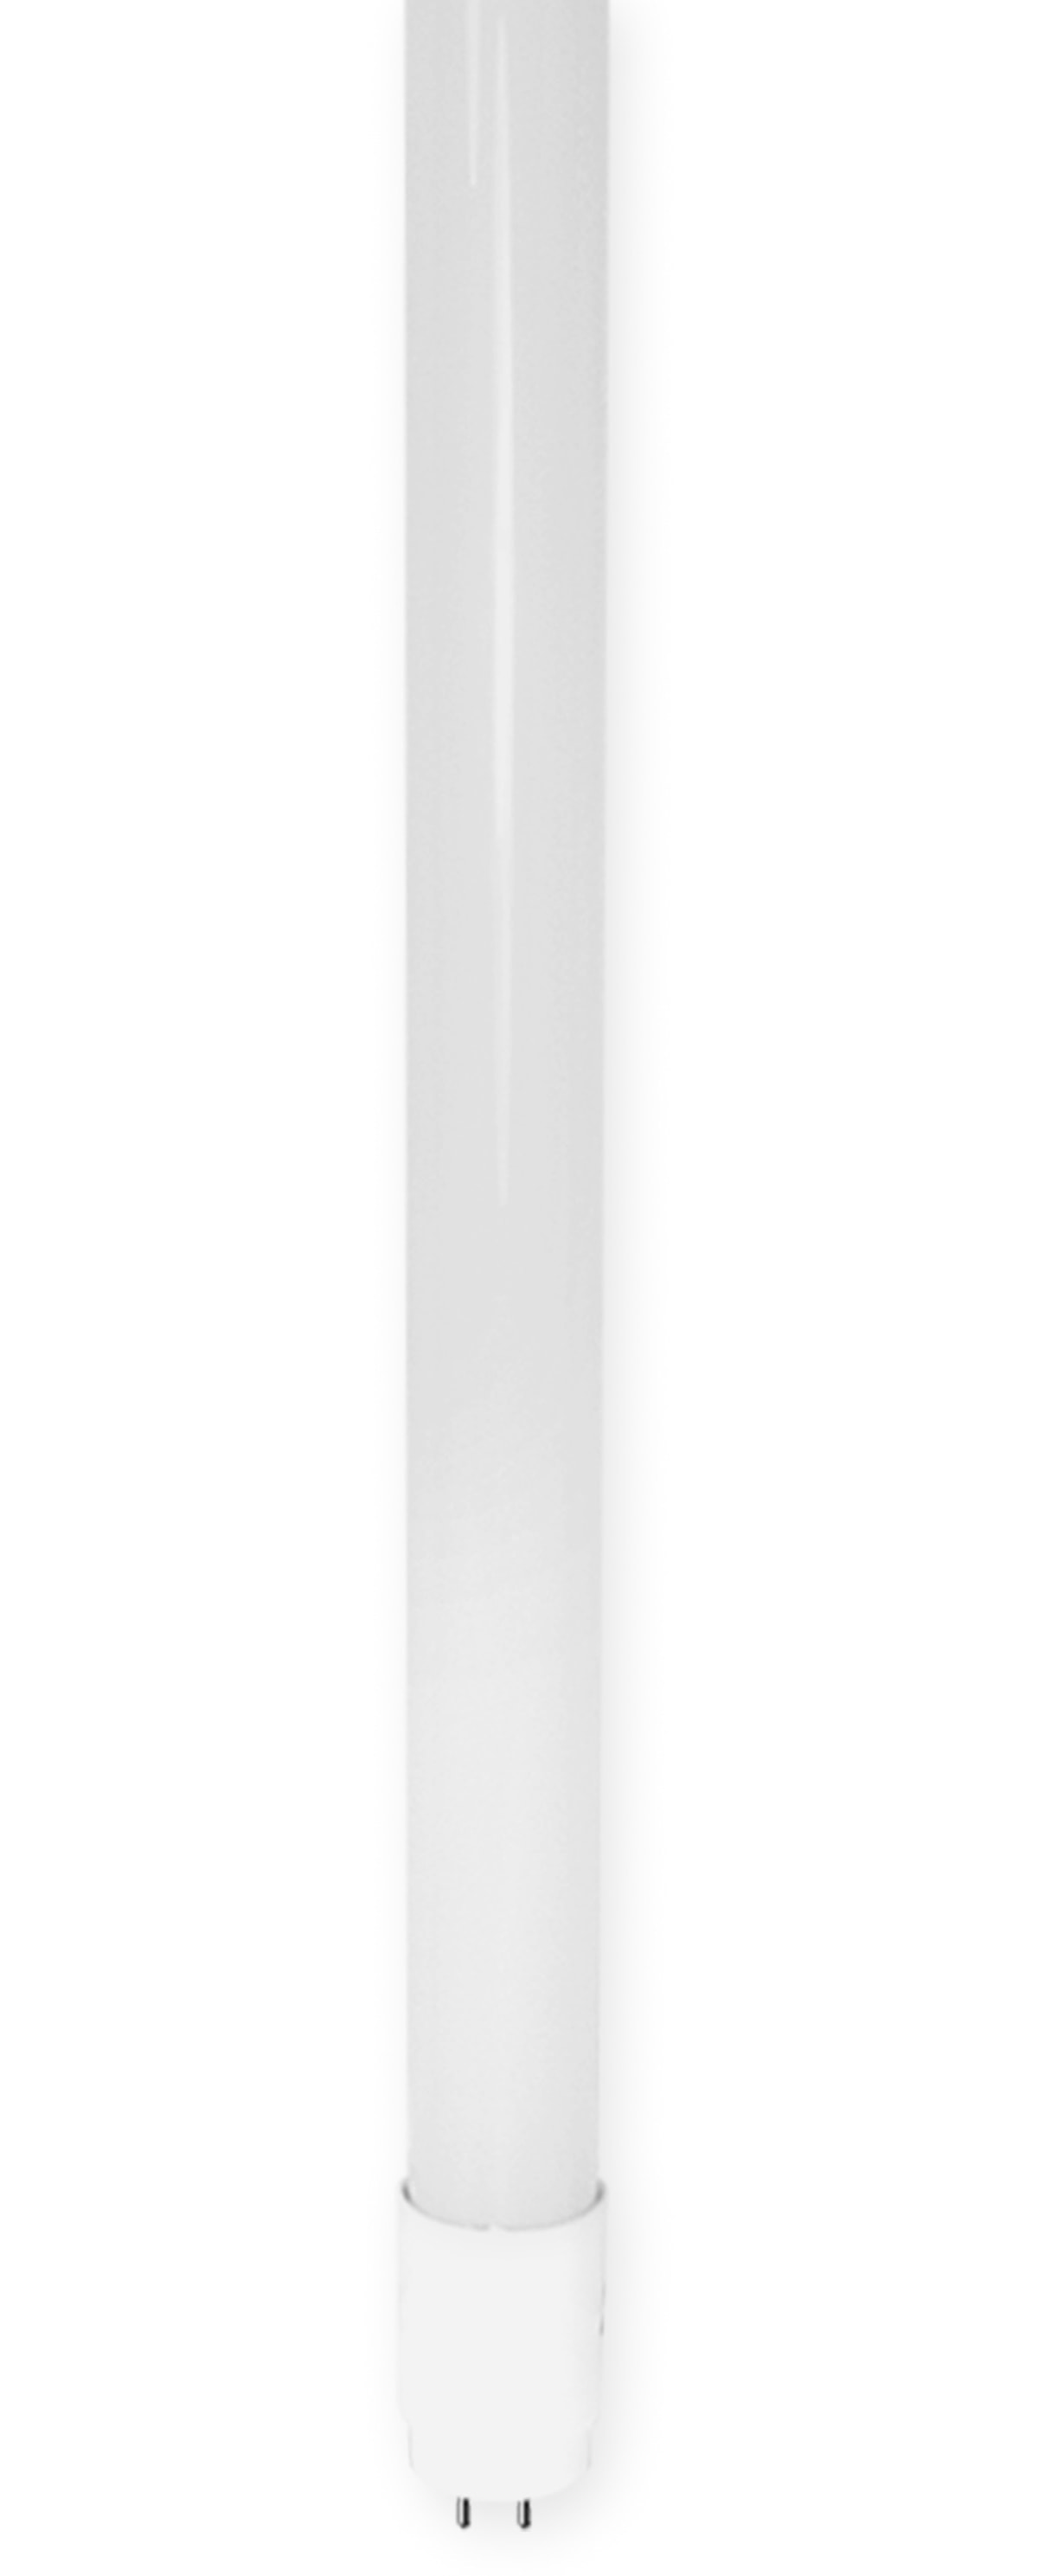 BLULAXA LED-Röhre 48544 High Lumen, EEK: D, 28 W, 4200 lm, G13, 4000 K, 150 cm